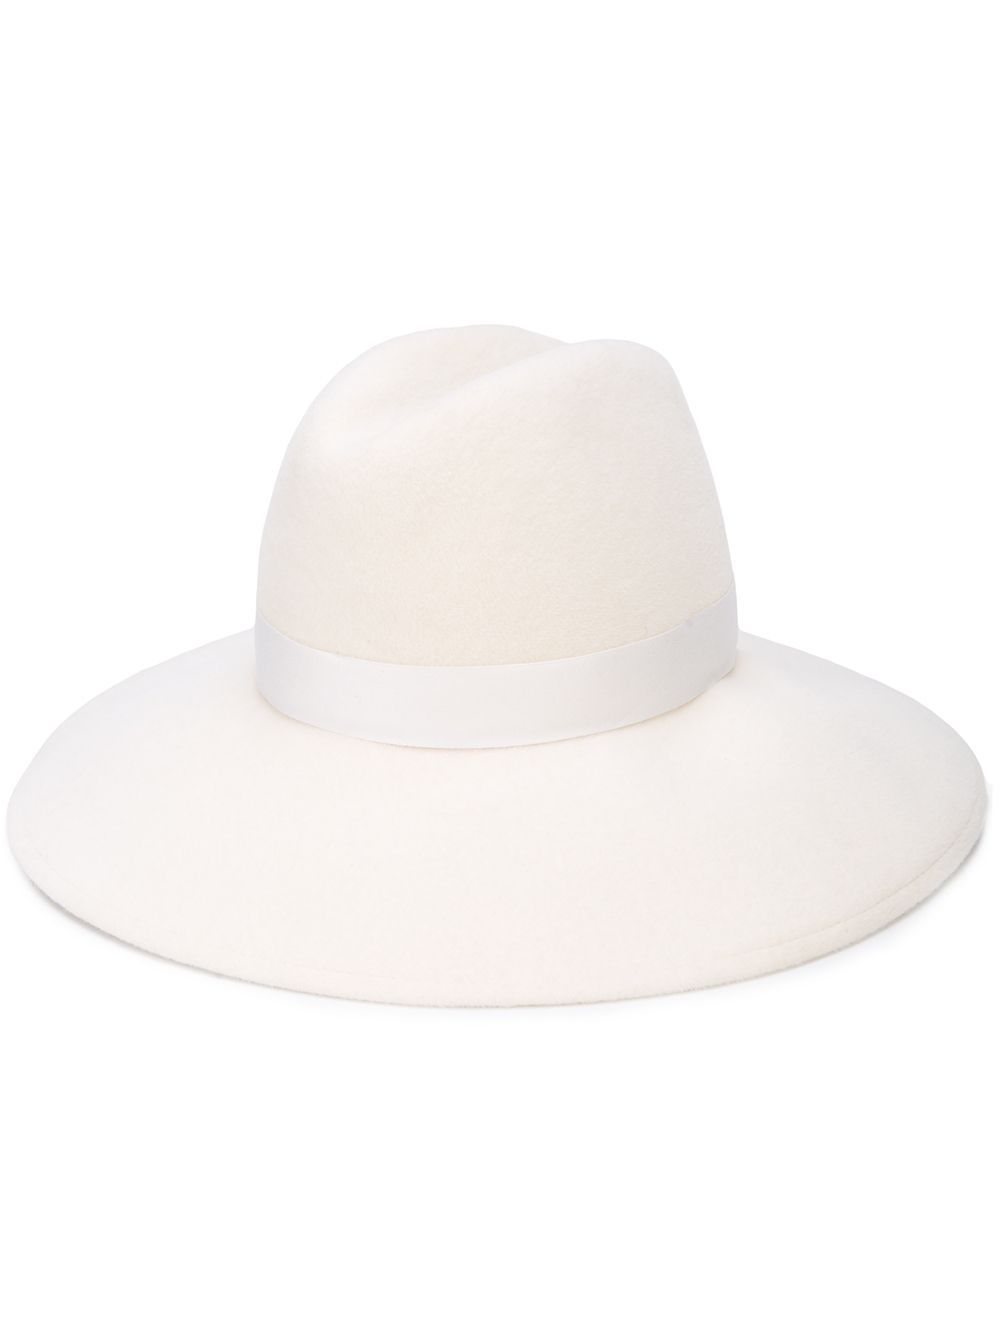 Gigi Burris Millinery wide brim hat - White | FarFetch Global